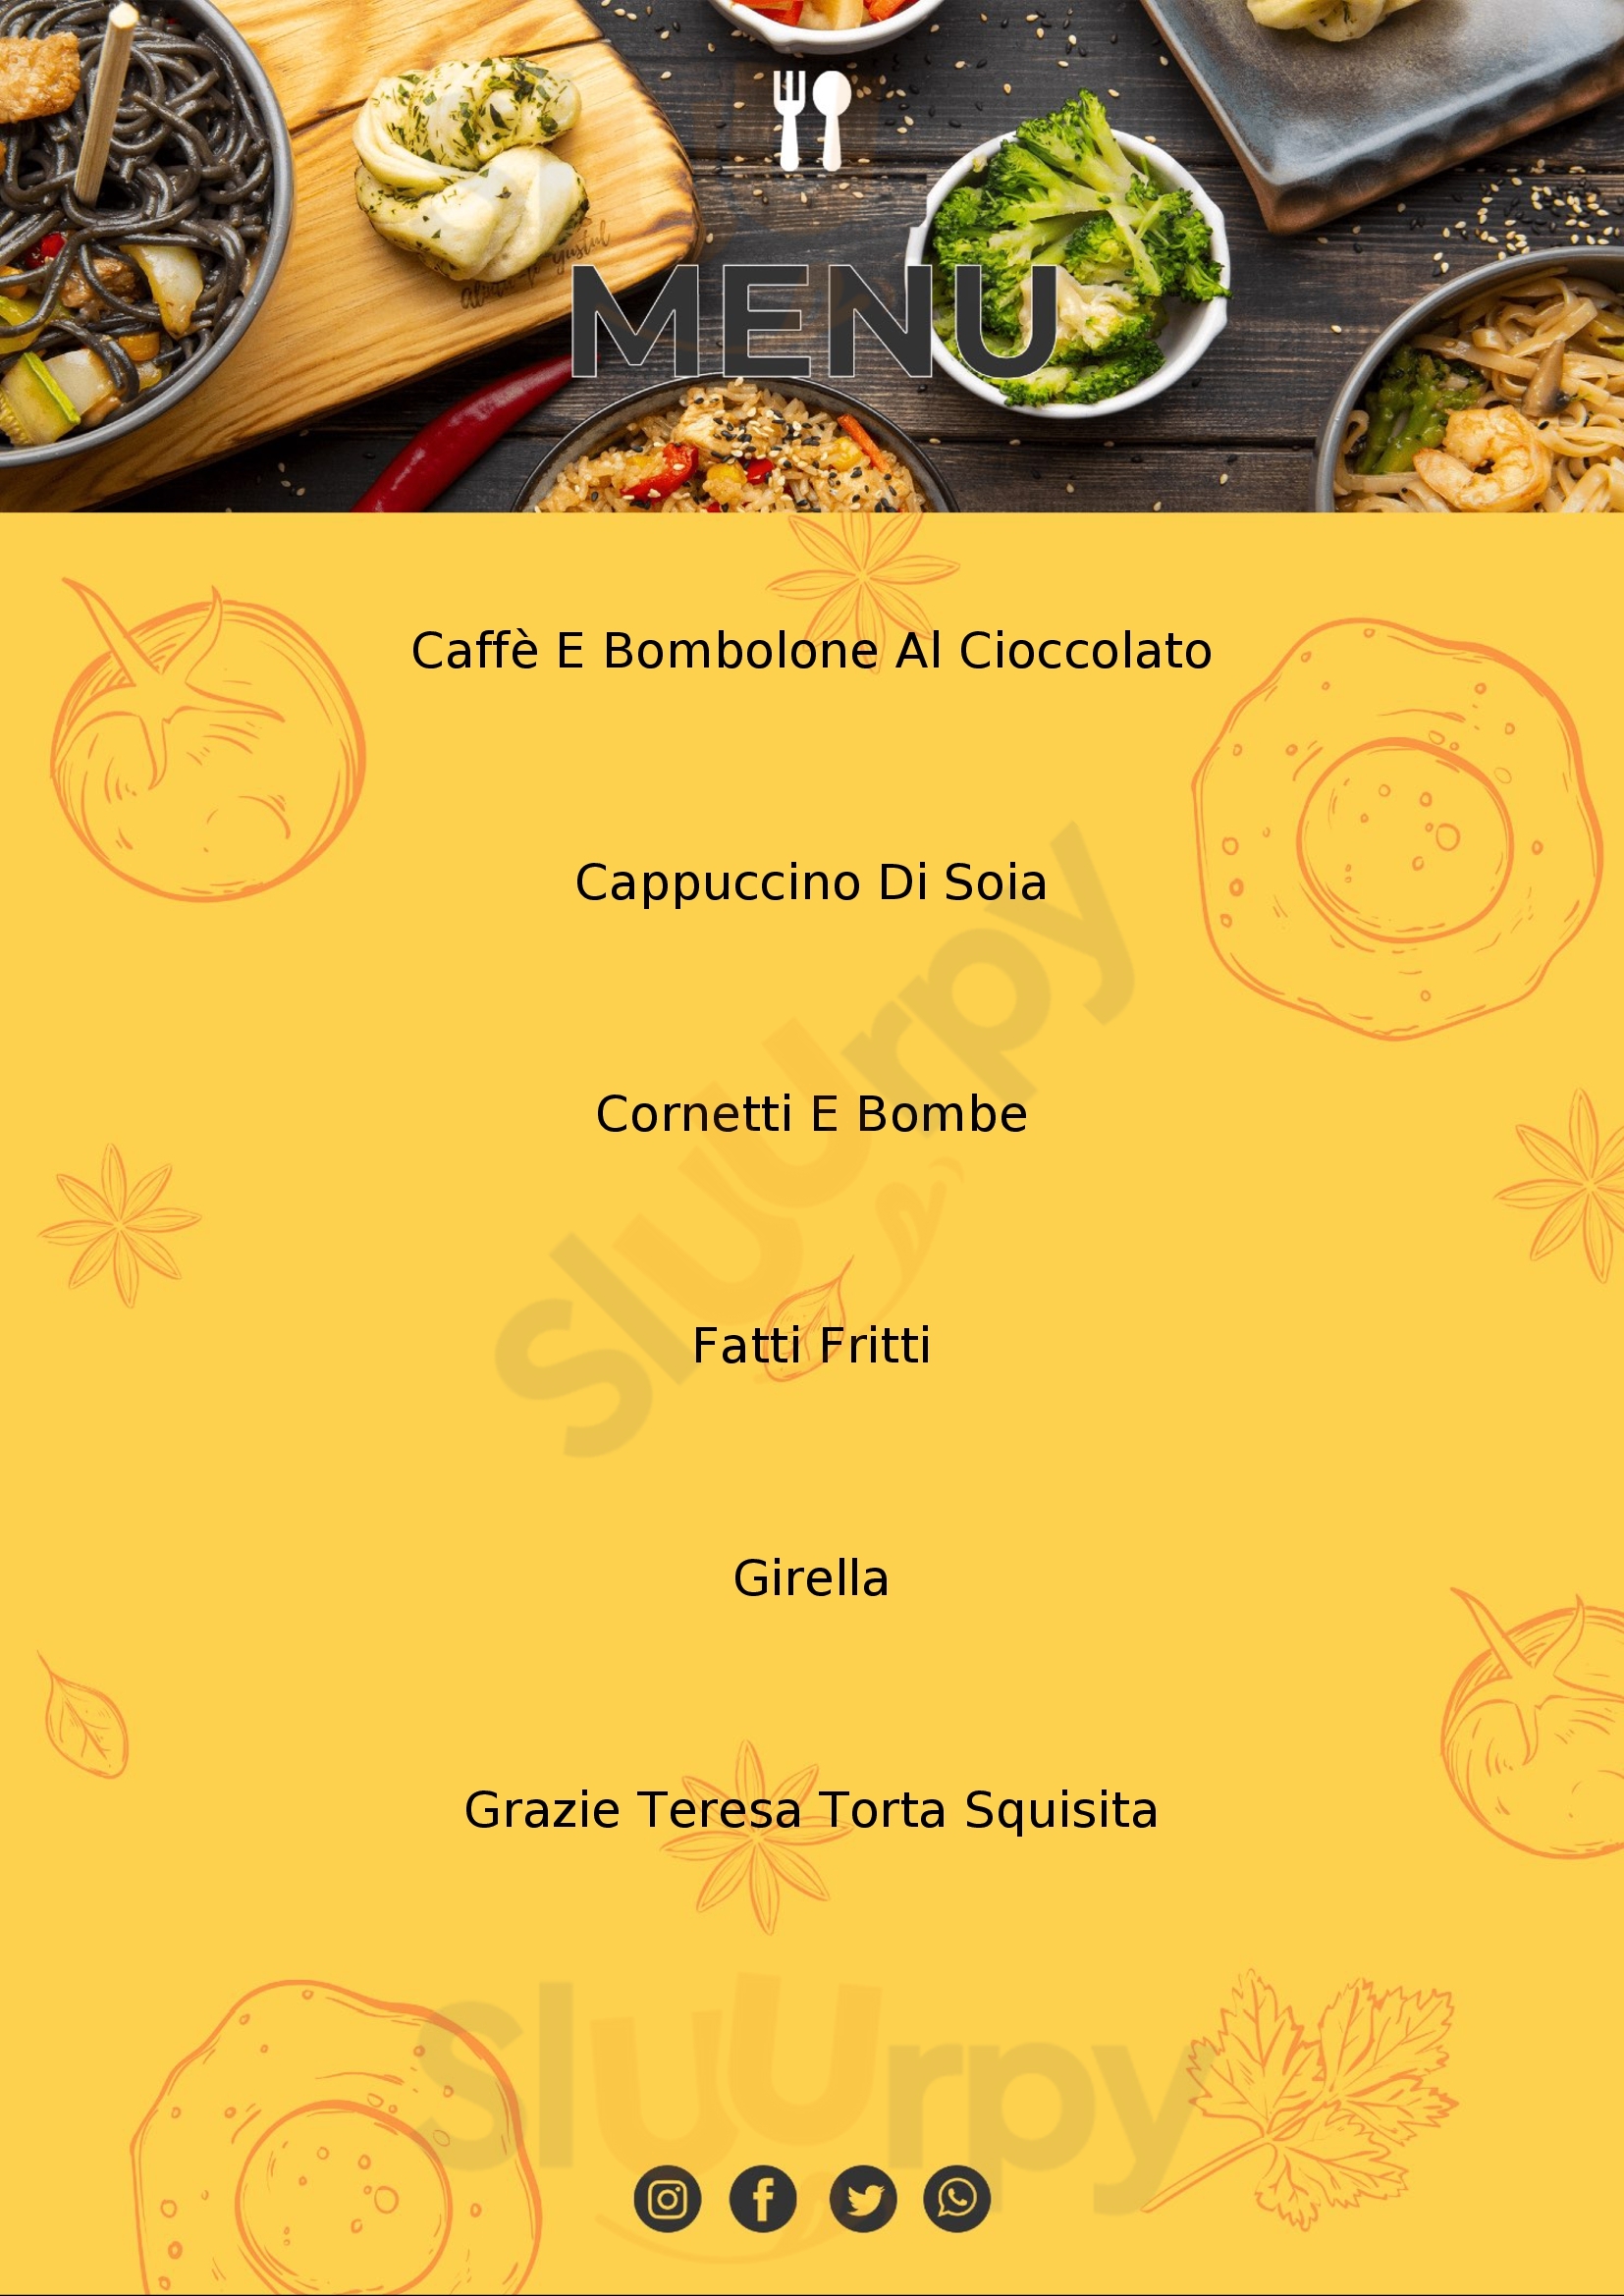 Dolce & Salato Riola Sardo menù 1 pagina